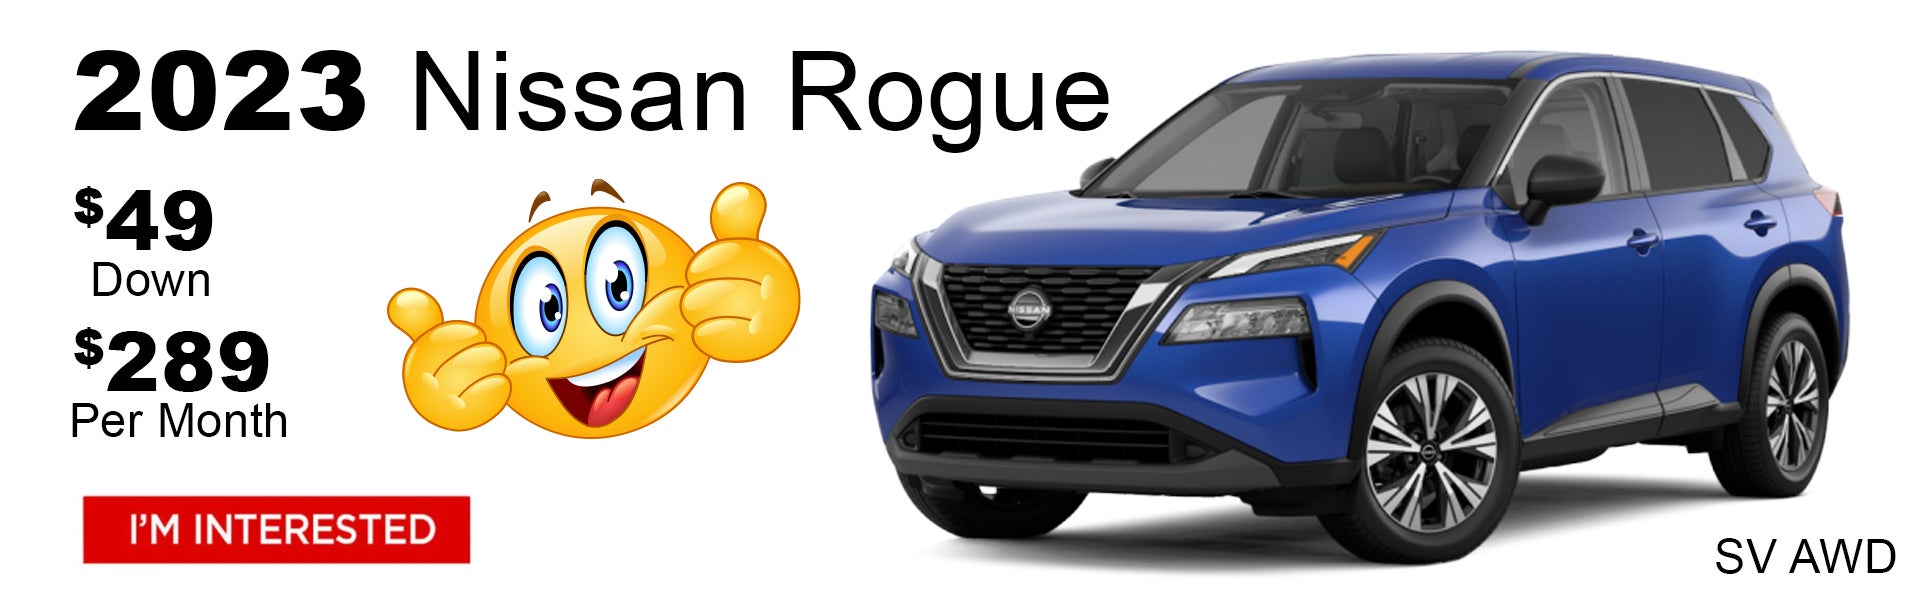 New Nissan Rogue $49 Dealer Special